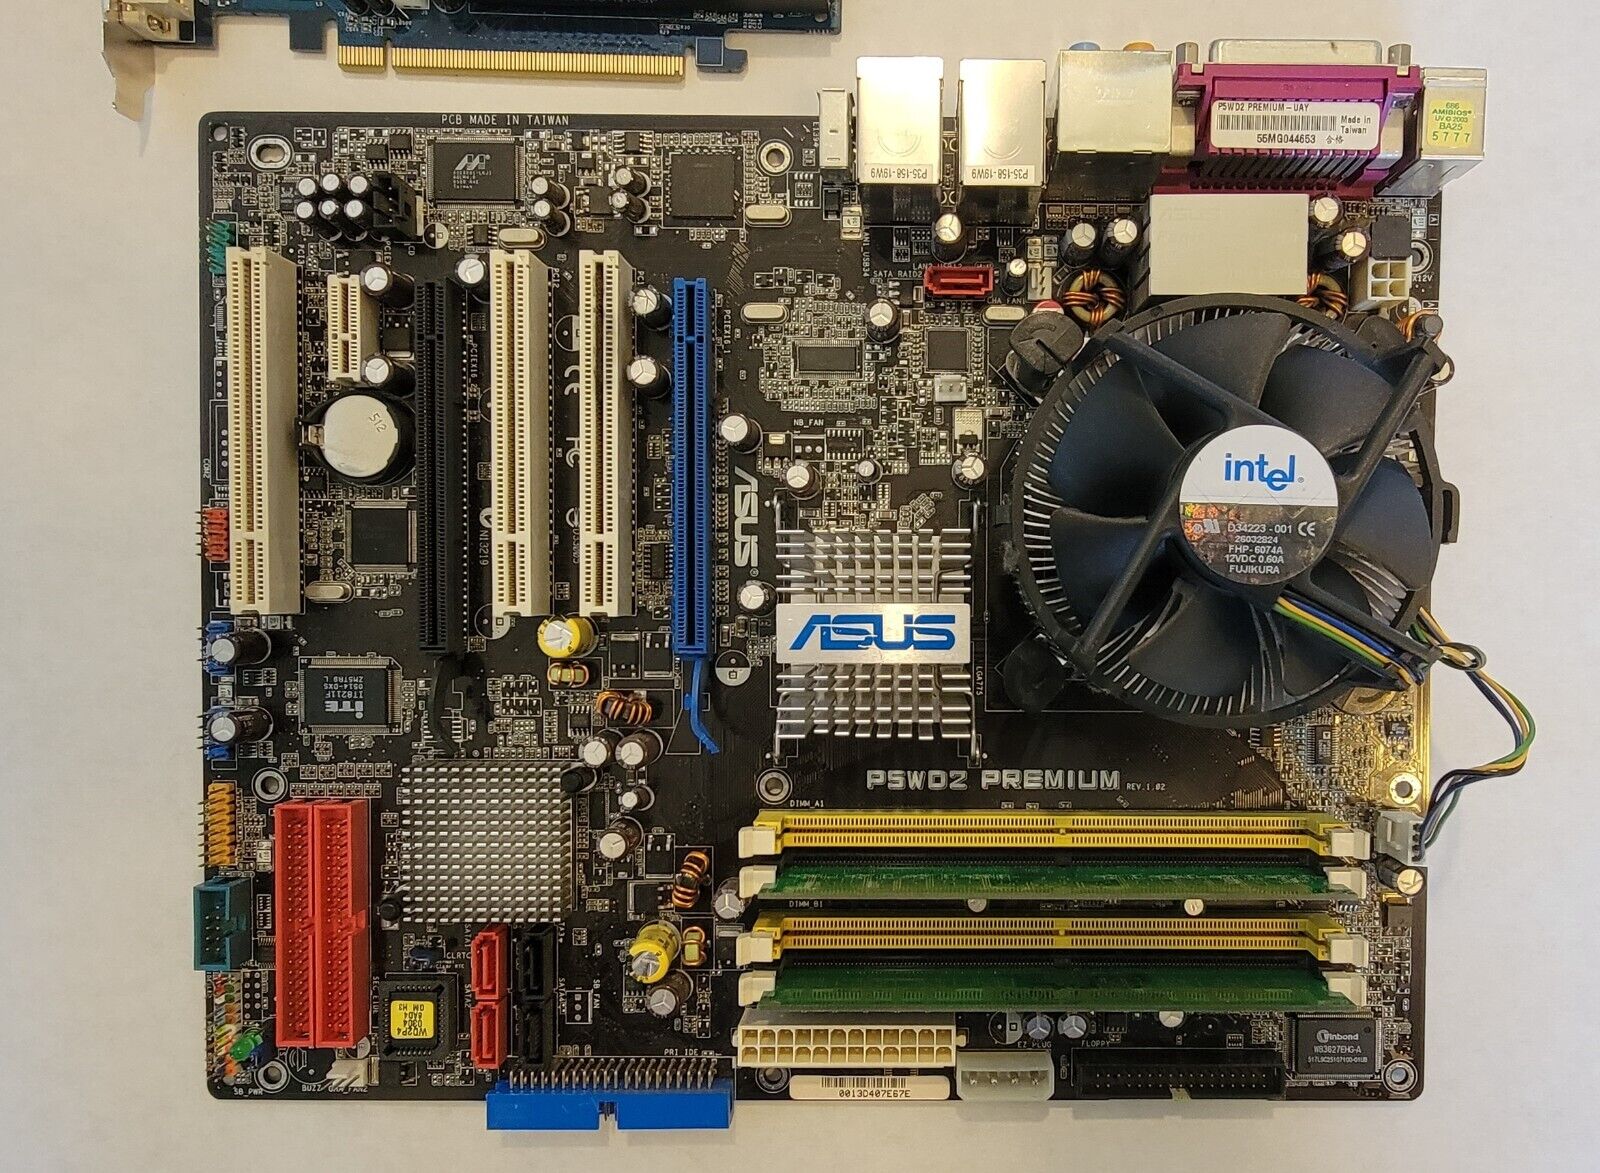 ASUS P5WD2 Premium LGA 775 Intel 955X ATX Motherboard w/ 3.00GHz CPU 1GB Ram 